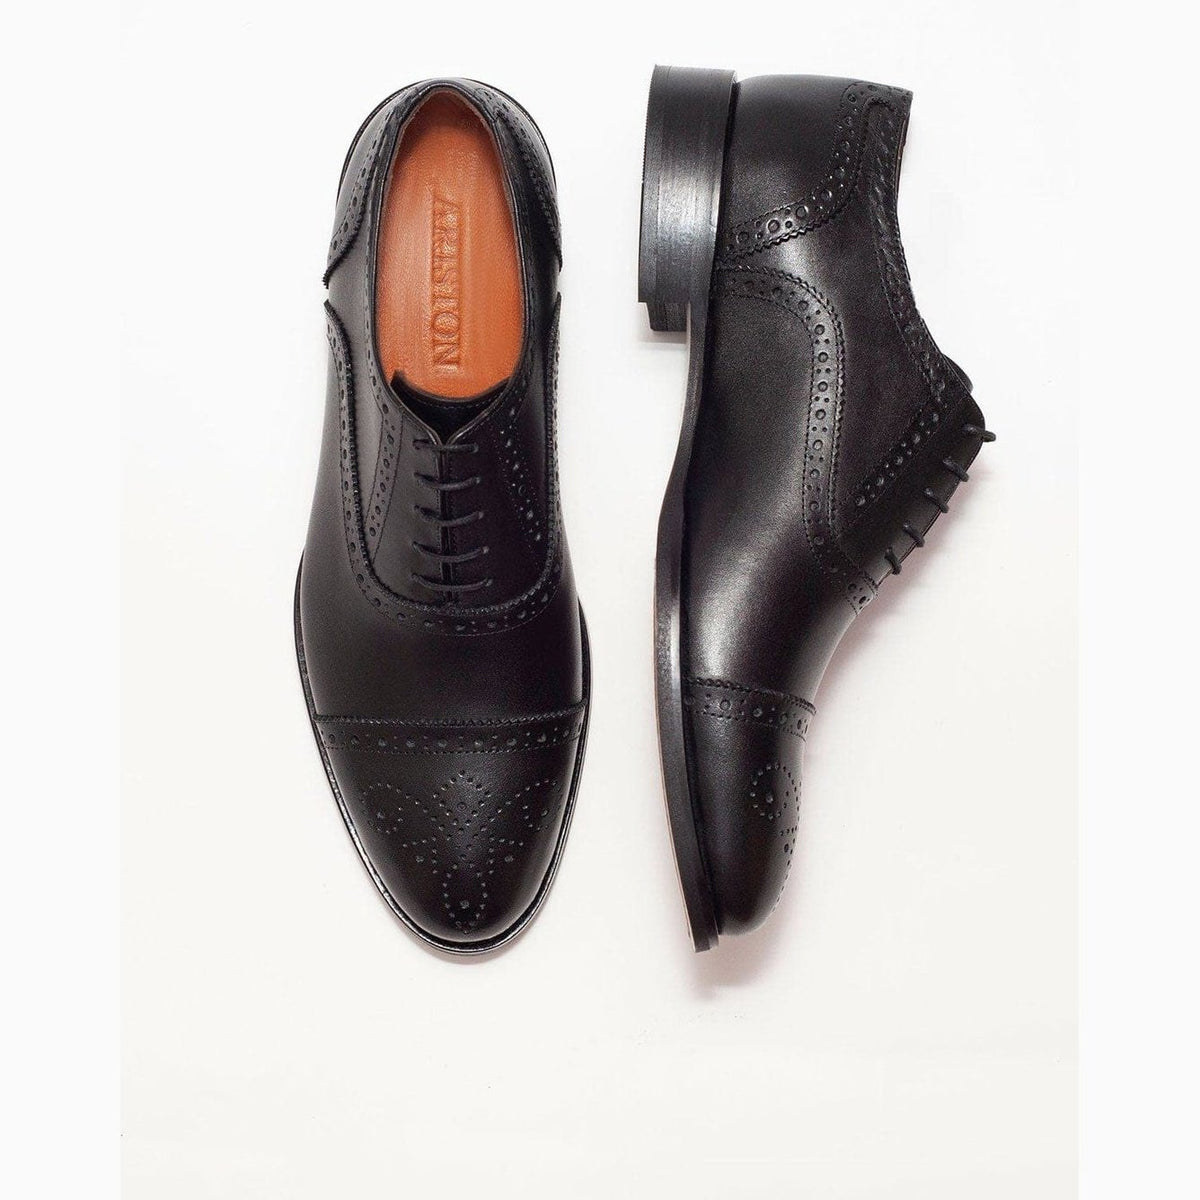 Ariston SHOES Ariston Mens Black Lace-up Oxford Leather Dress Shoes